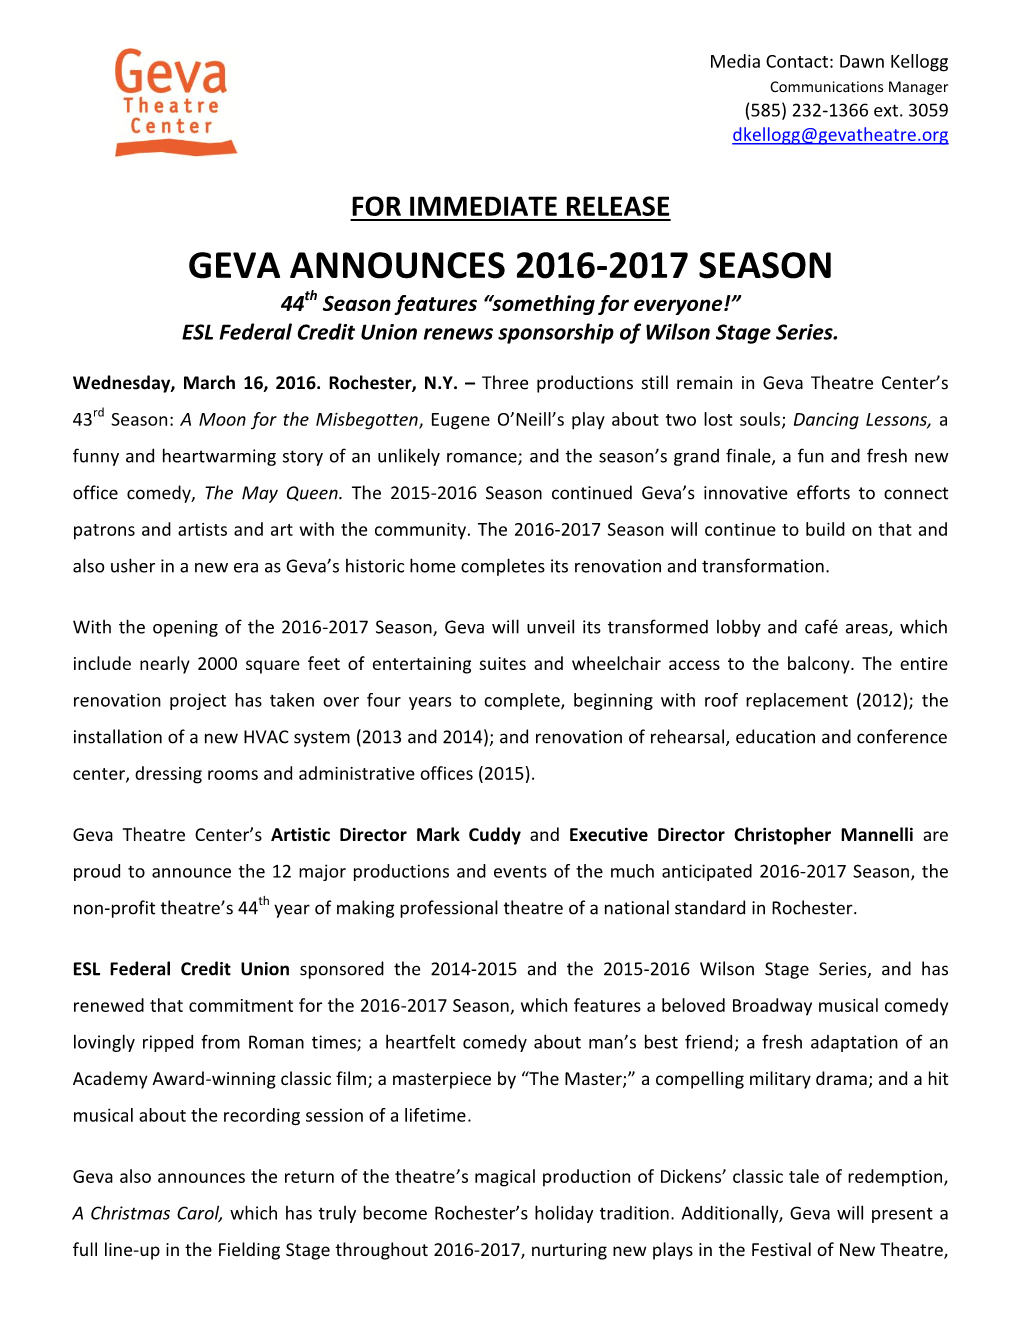 GEVA ANNOUNCES 2016-2017 SEASON 44Th Season Features “Something for Everyone!” ESL Federal Credit Union Renews Sponsorship of Wilson Stage Series